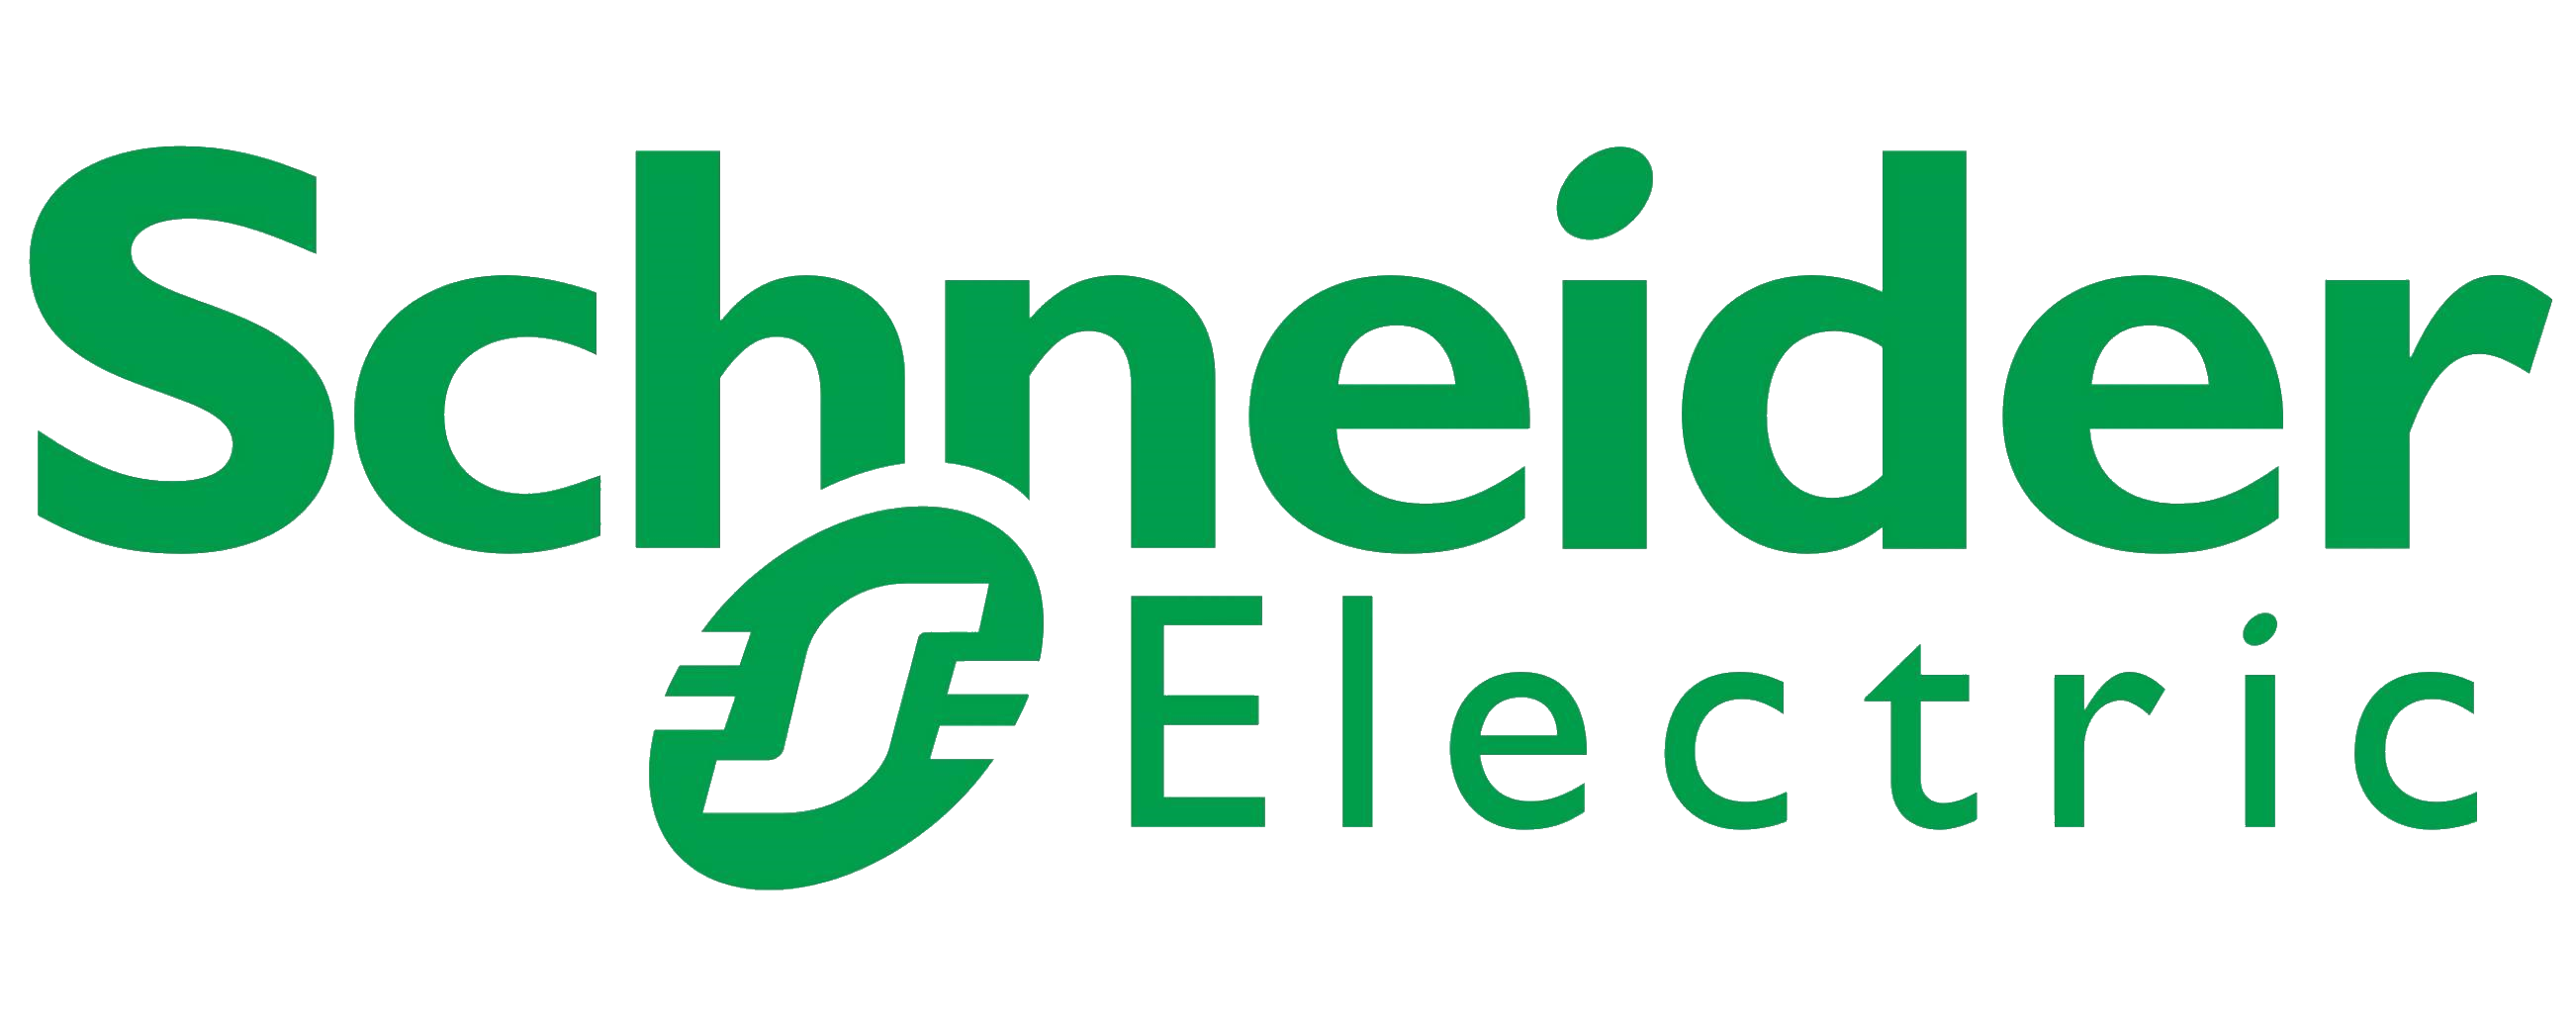 Schneider-Electric-logo-jpg-.png